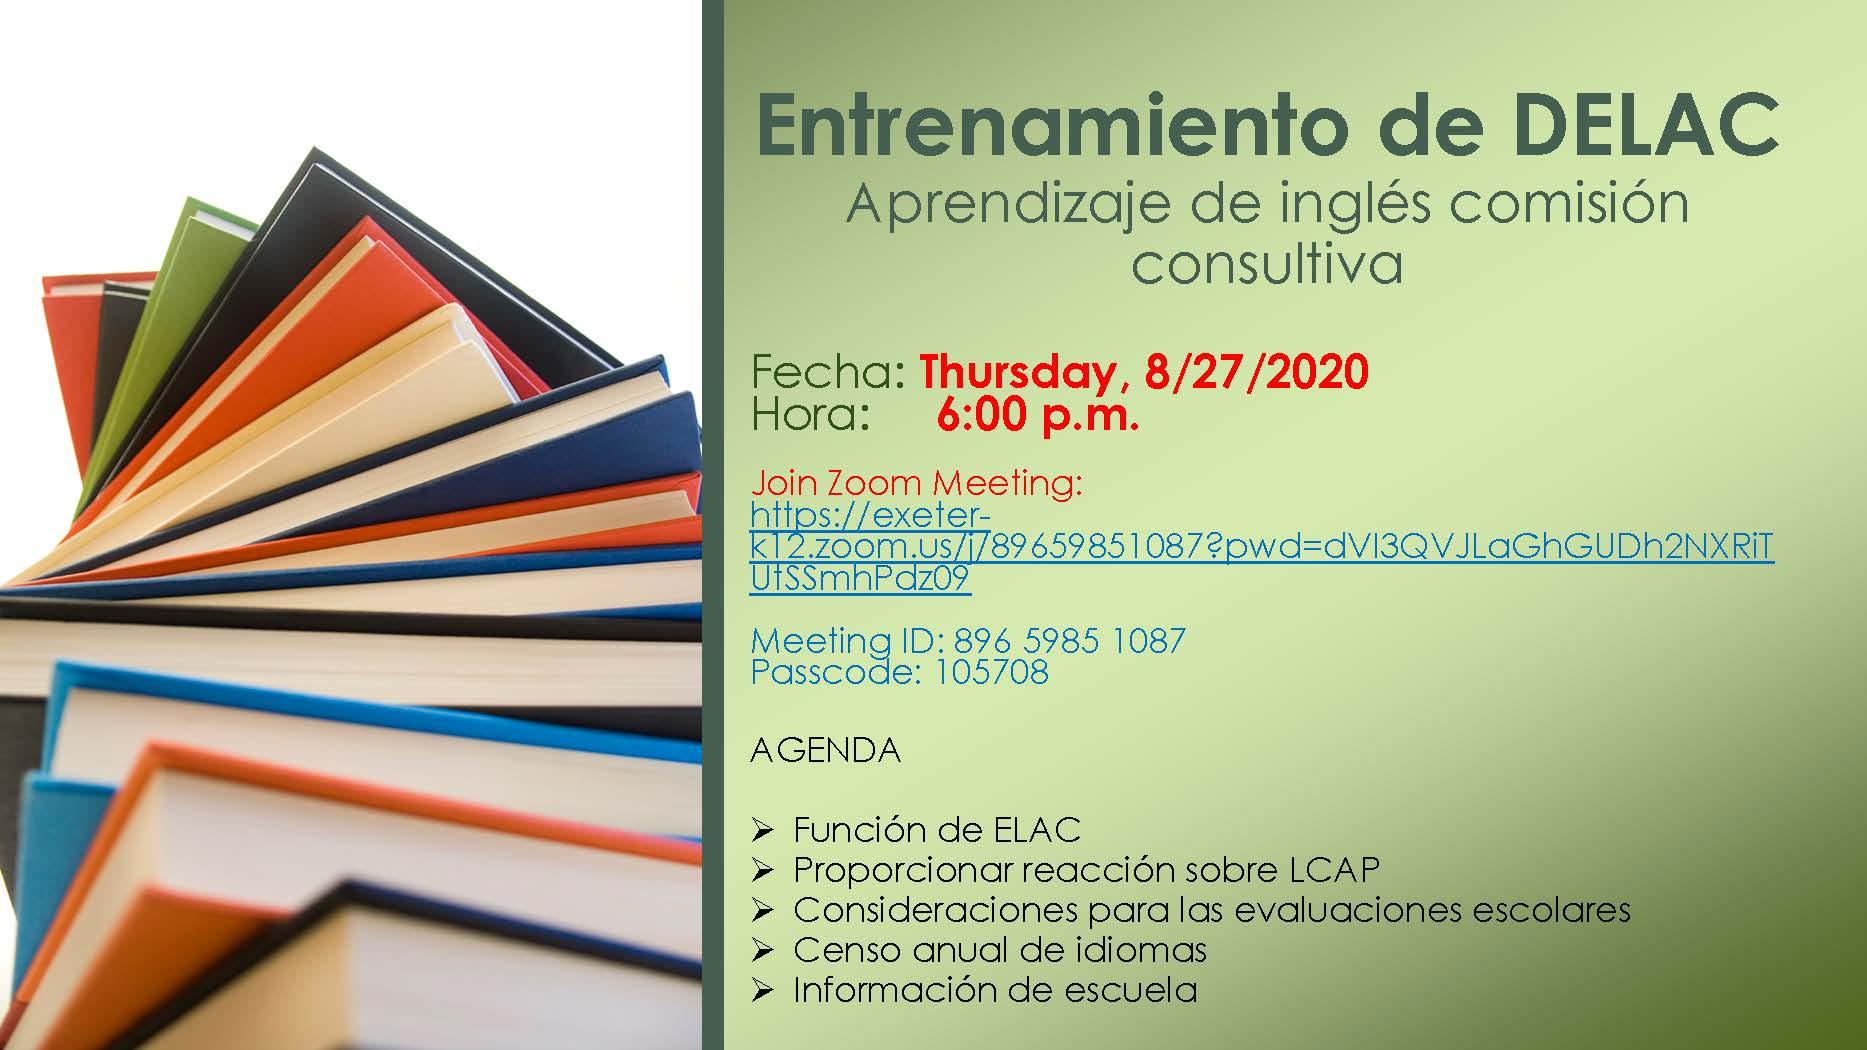 DELAC meeting info- Spanish